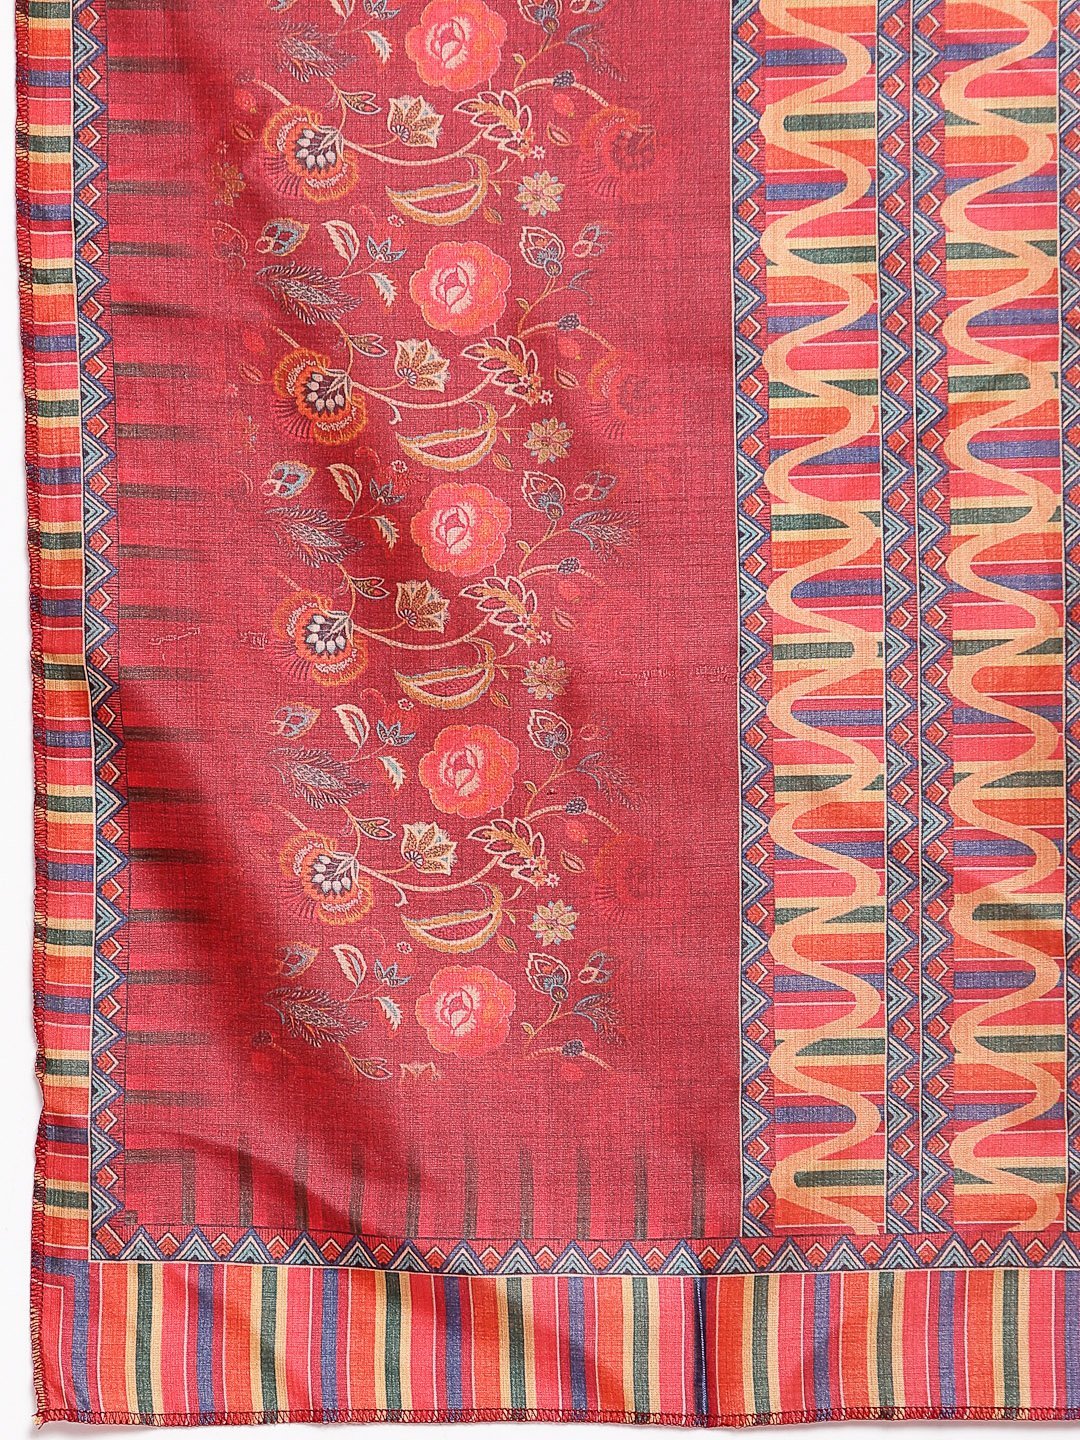 Women's Red Cotton Solid 3/4 Sleeve Square Neck Casual Kurta Pant Dupatta Set - Myshka